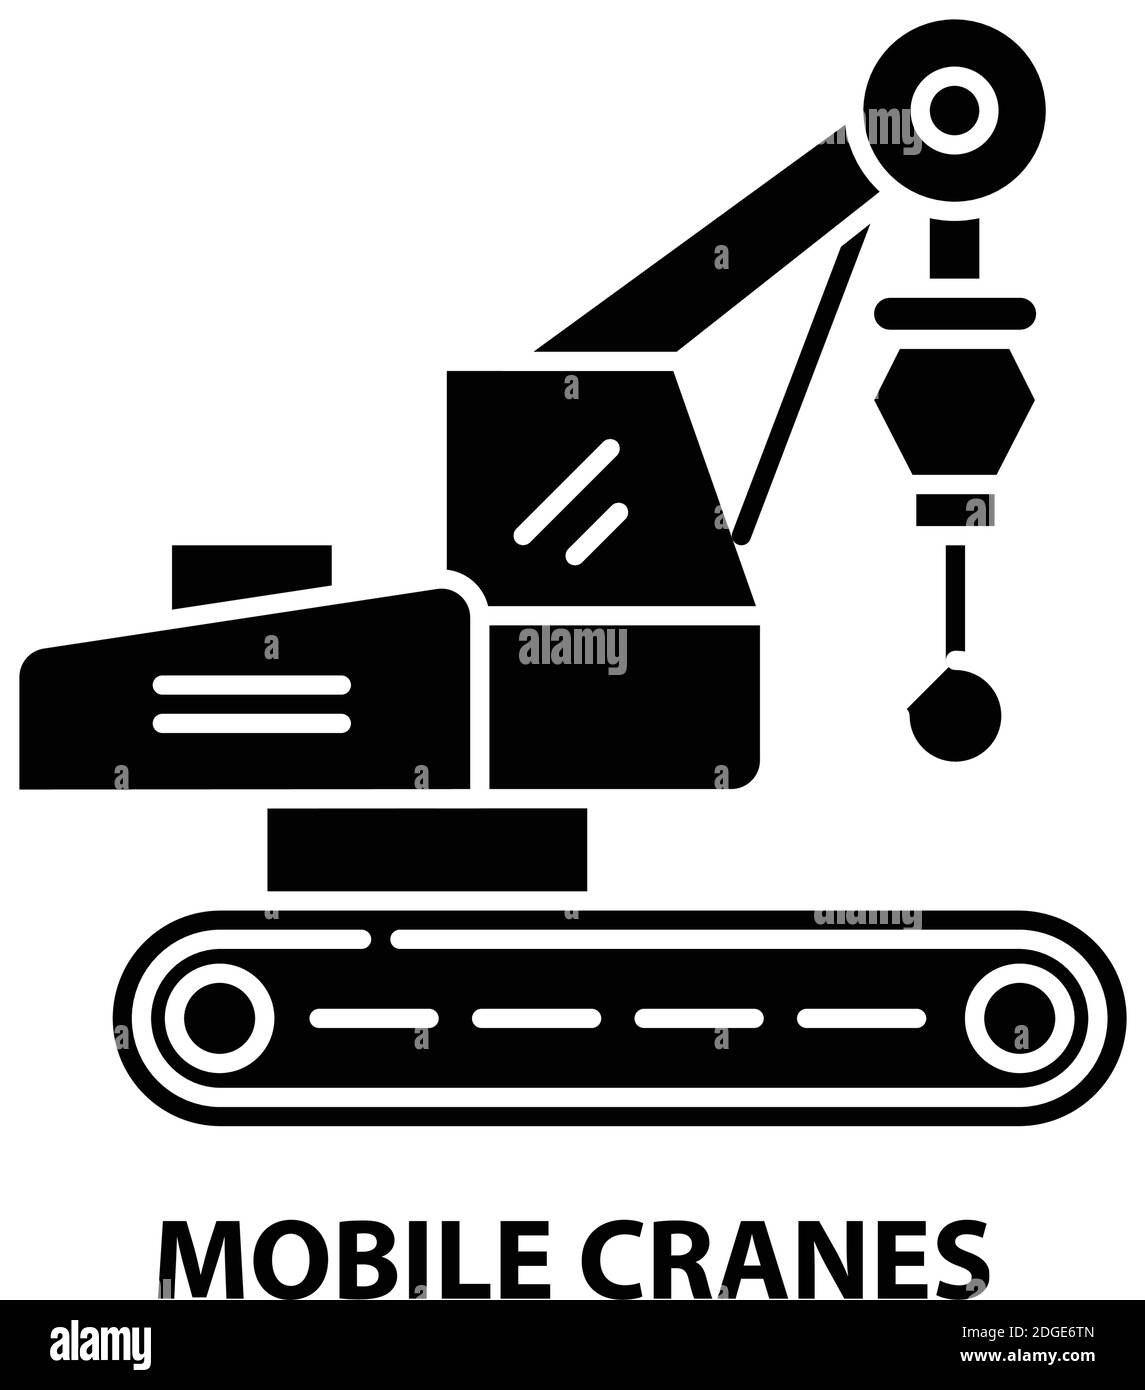 mobile cranes icon, black vector sign with editable strokes, concept illustration Stock Vector